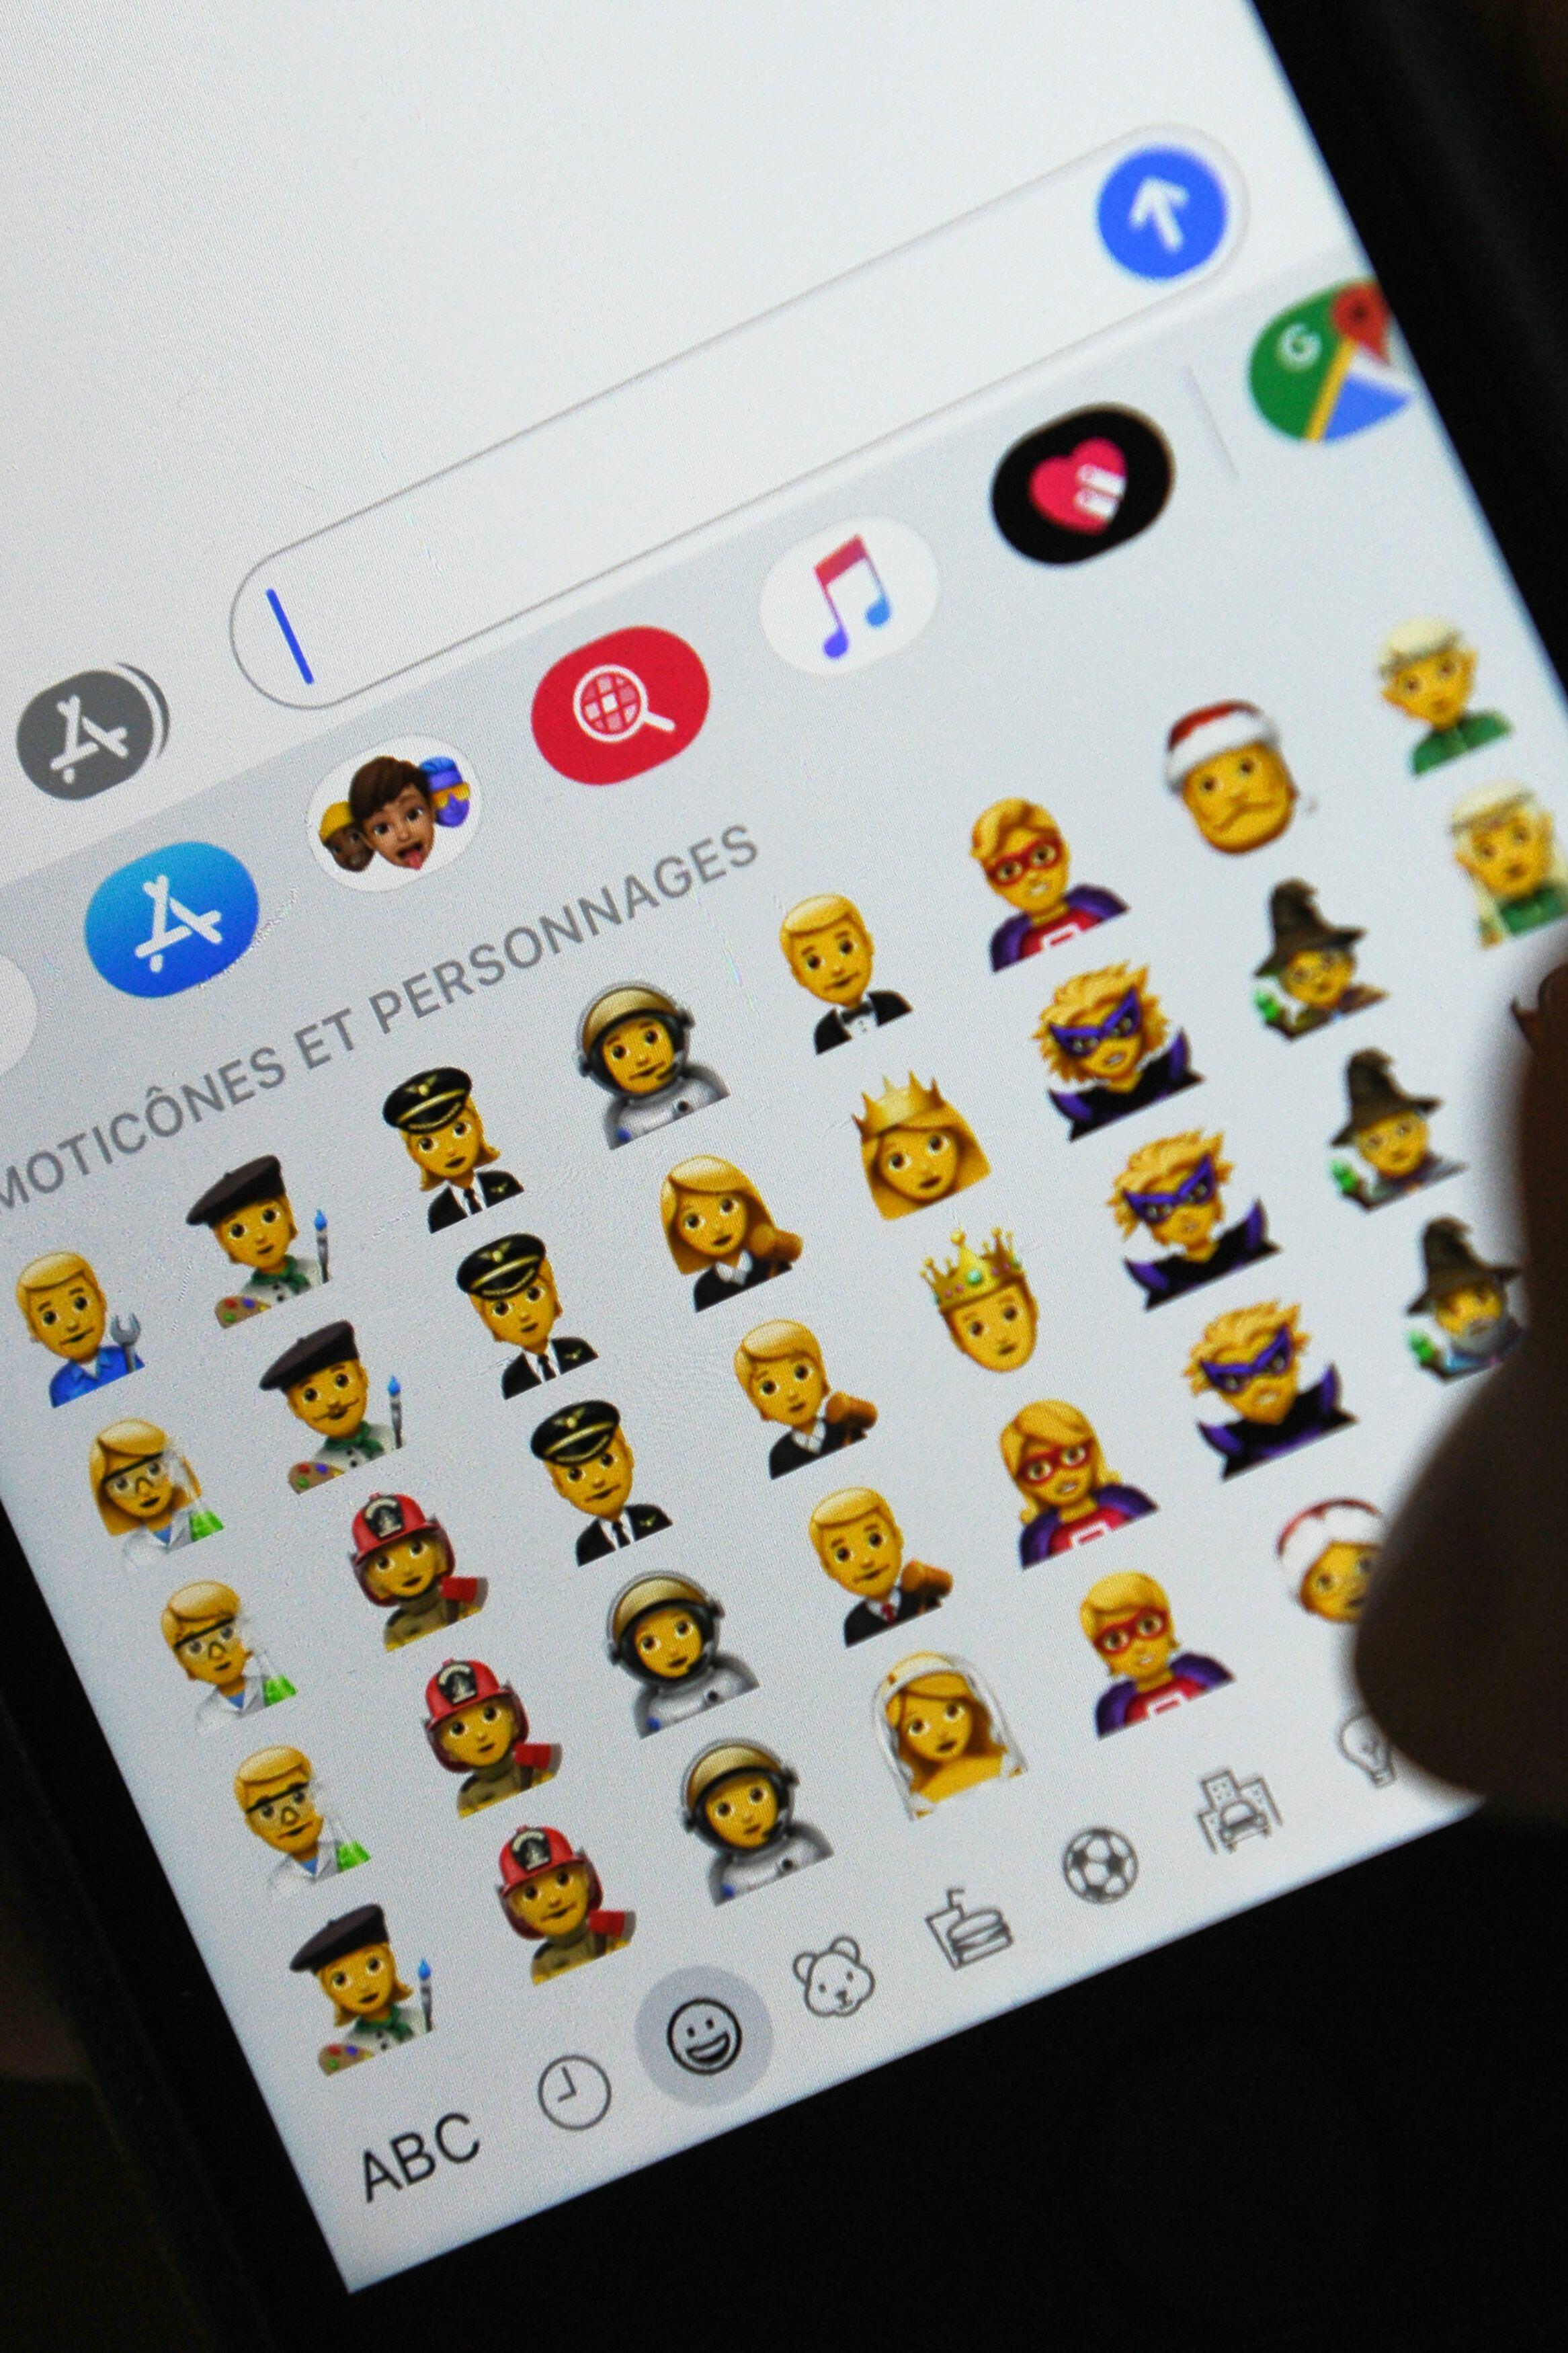 Petition · Add a Multi-Racial Handshake Emoji To iPhones ·